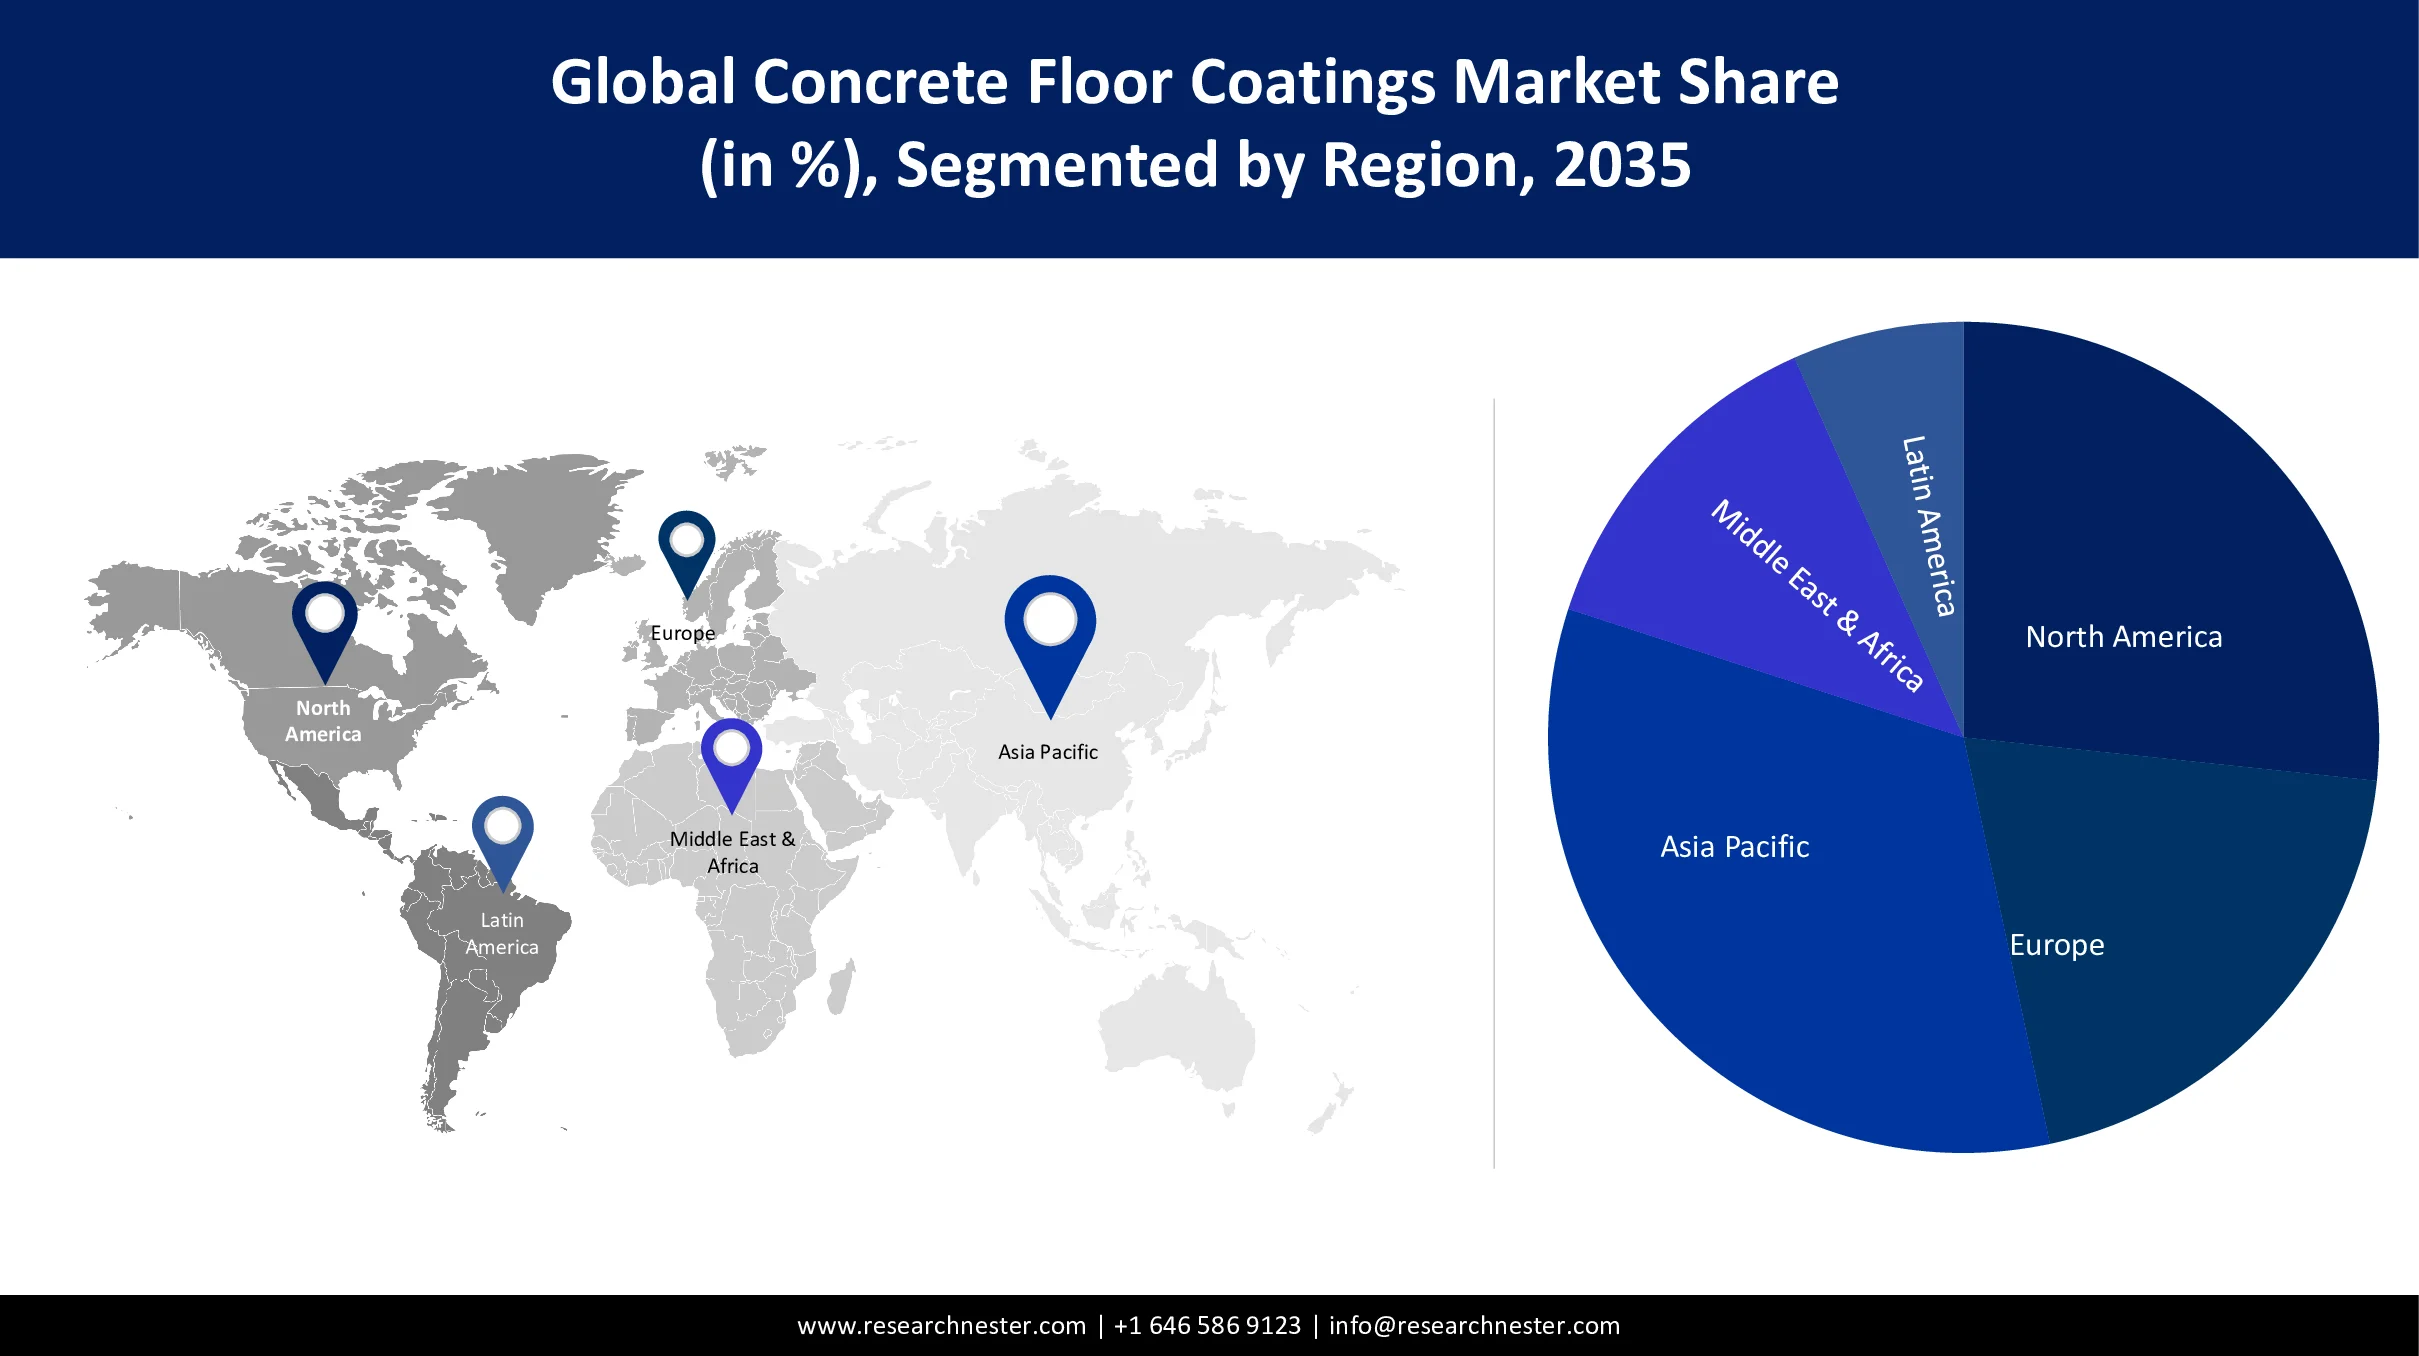 Concrete Floor Coatings Market Size